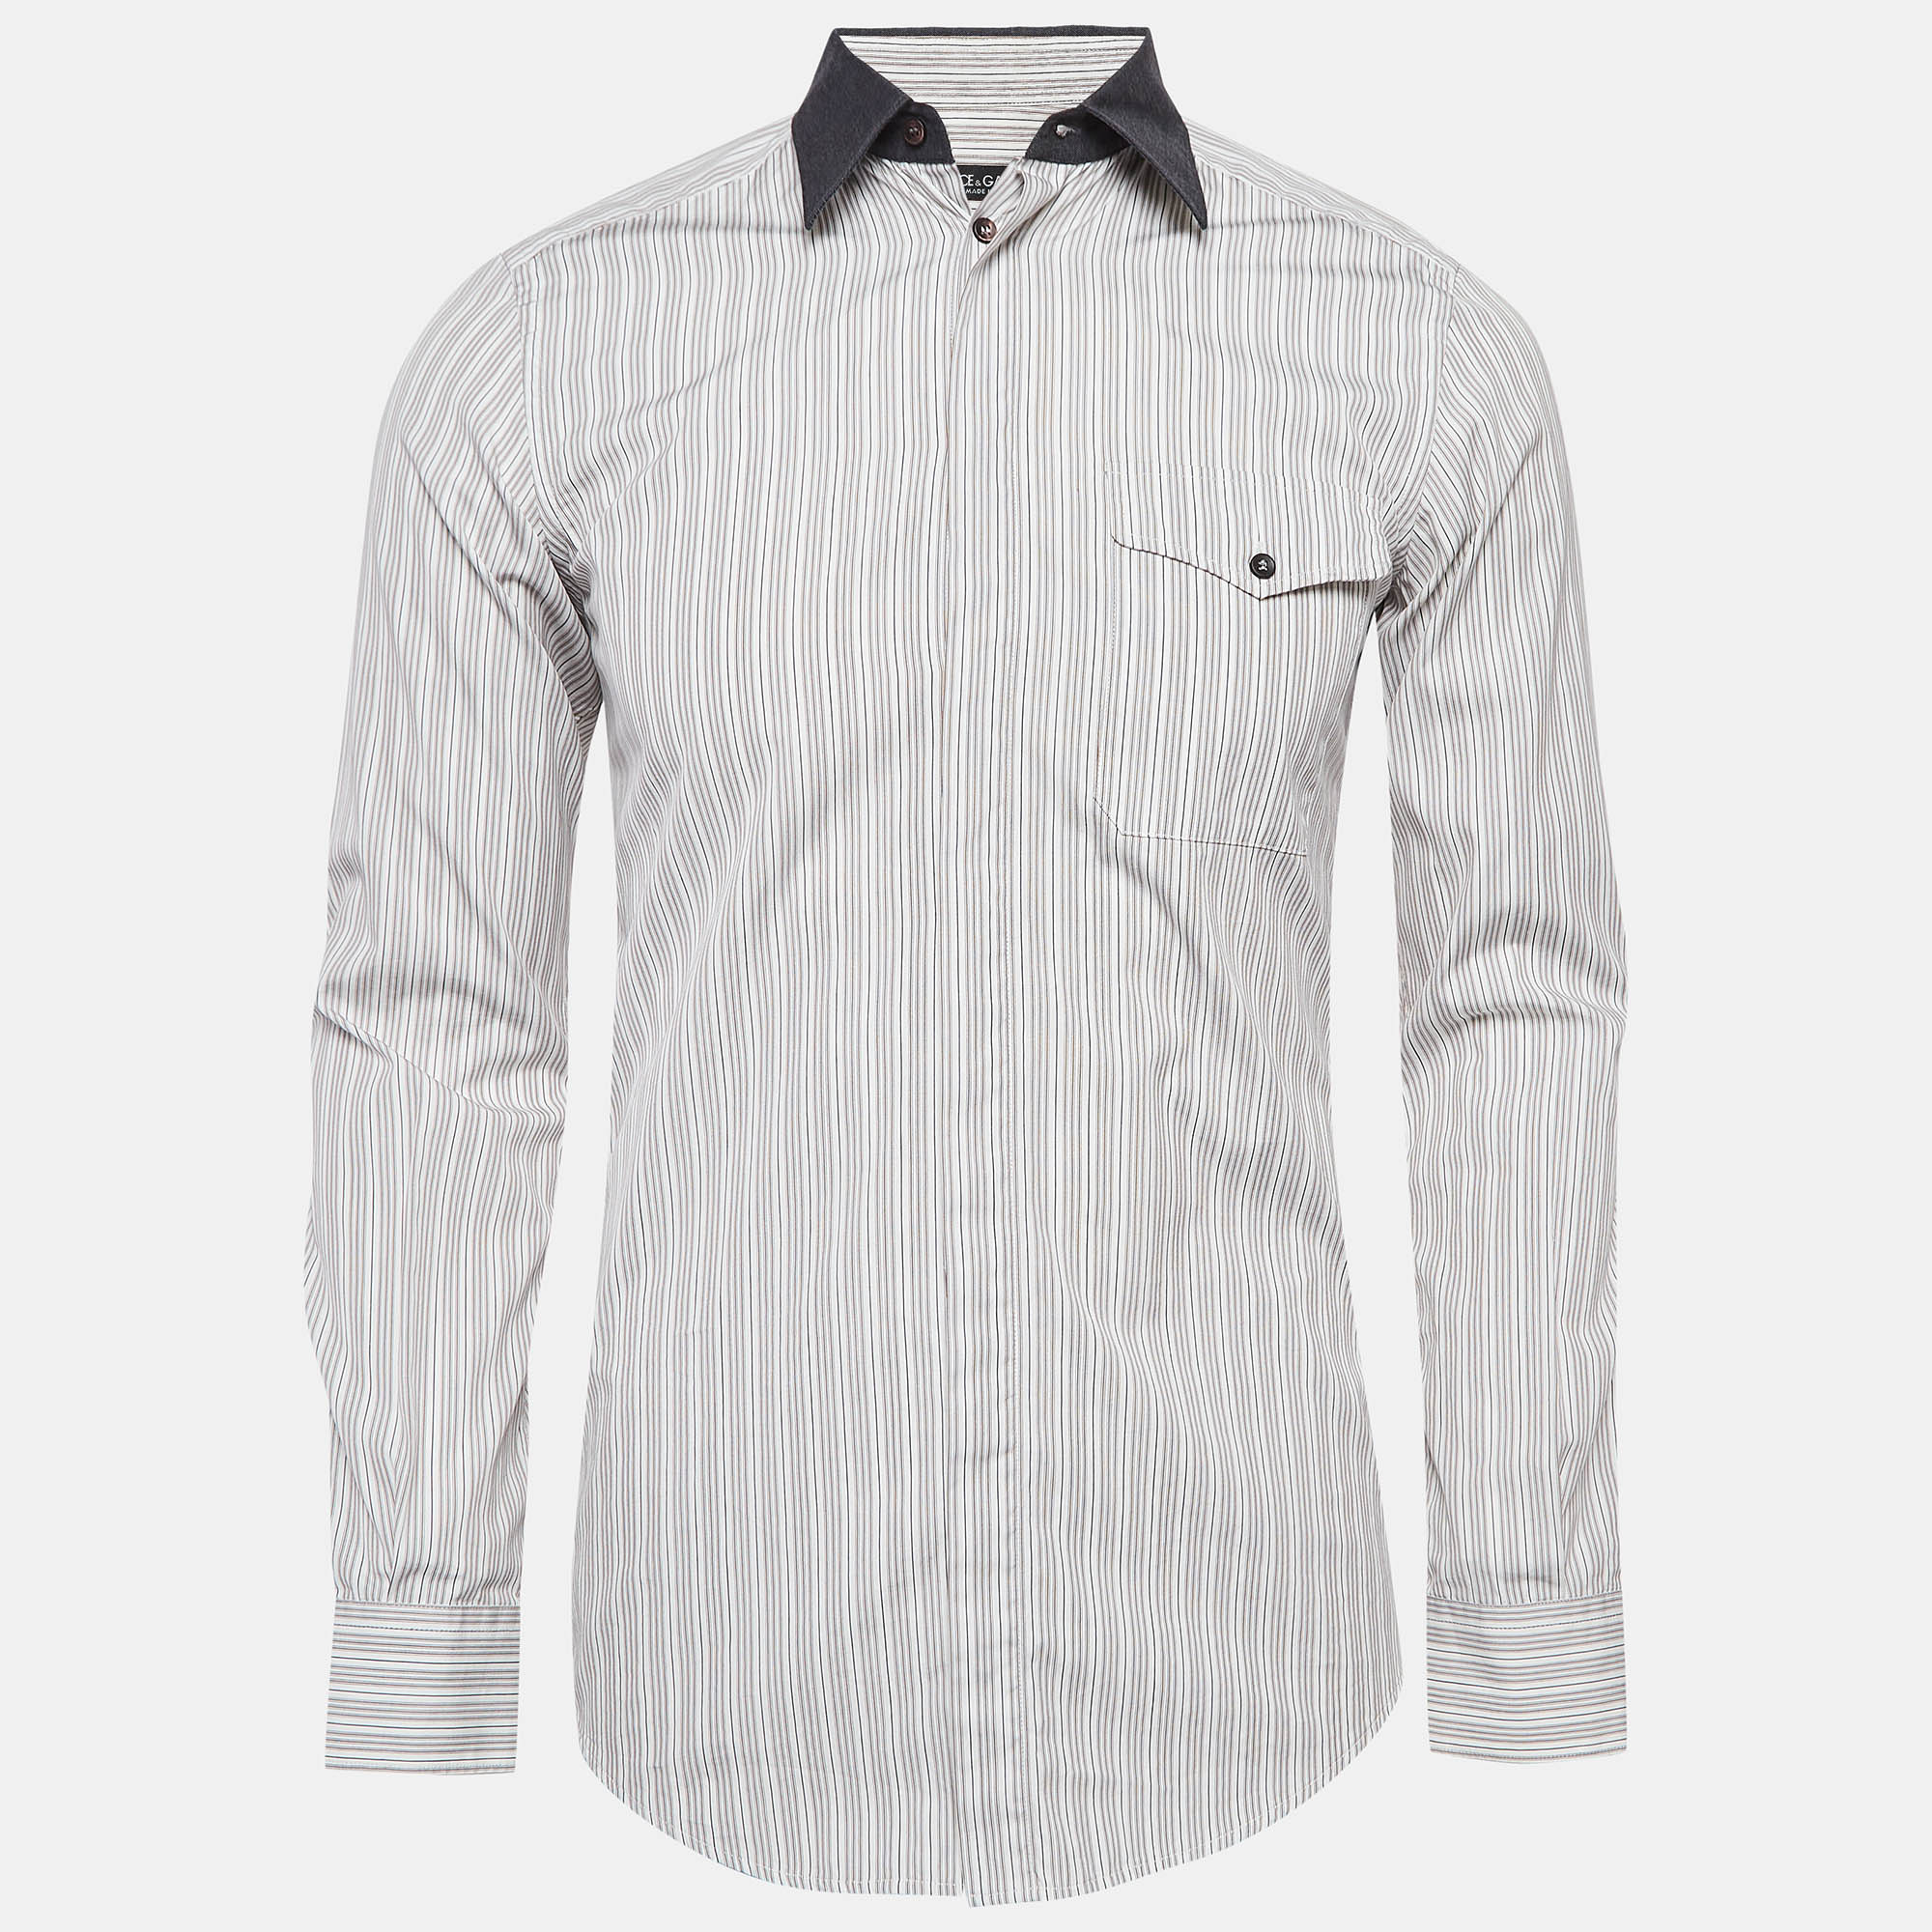 Dolce & gabbana white pinstripe cotton long sleeve shirt s